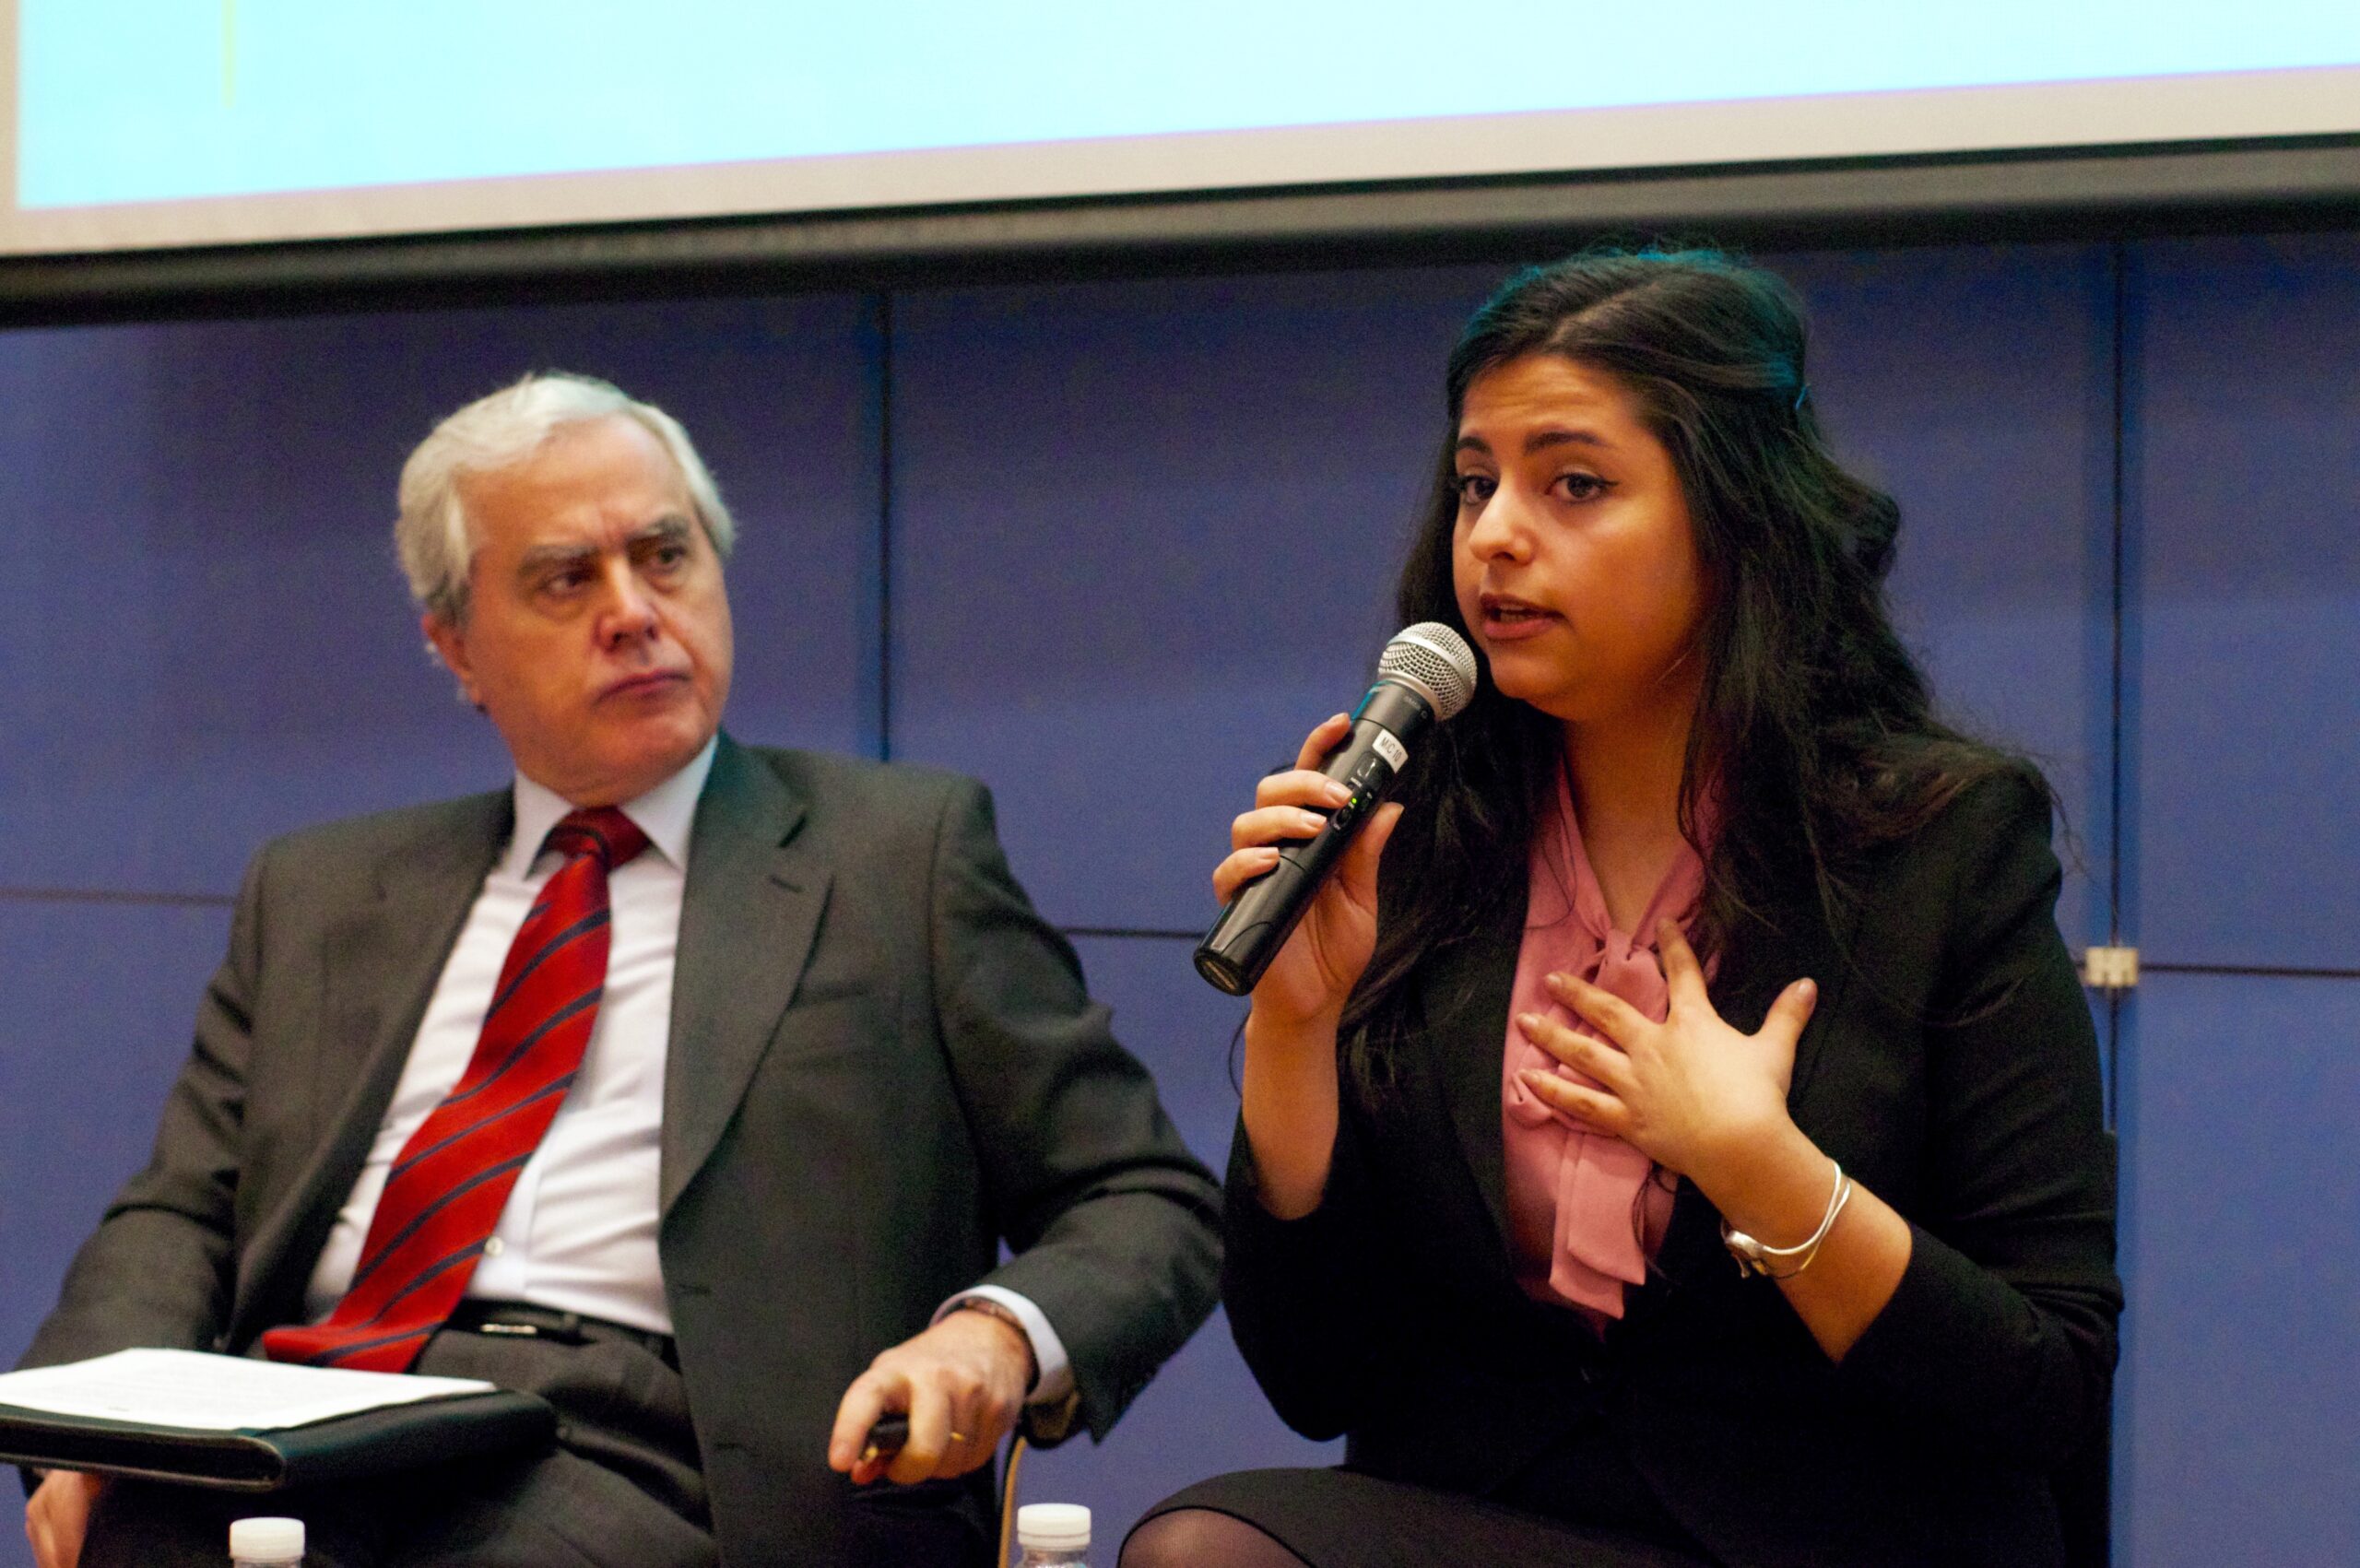 Sana Mustafa speaks at DAAD Event in April 2016